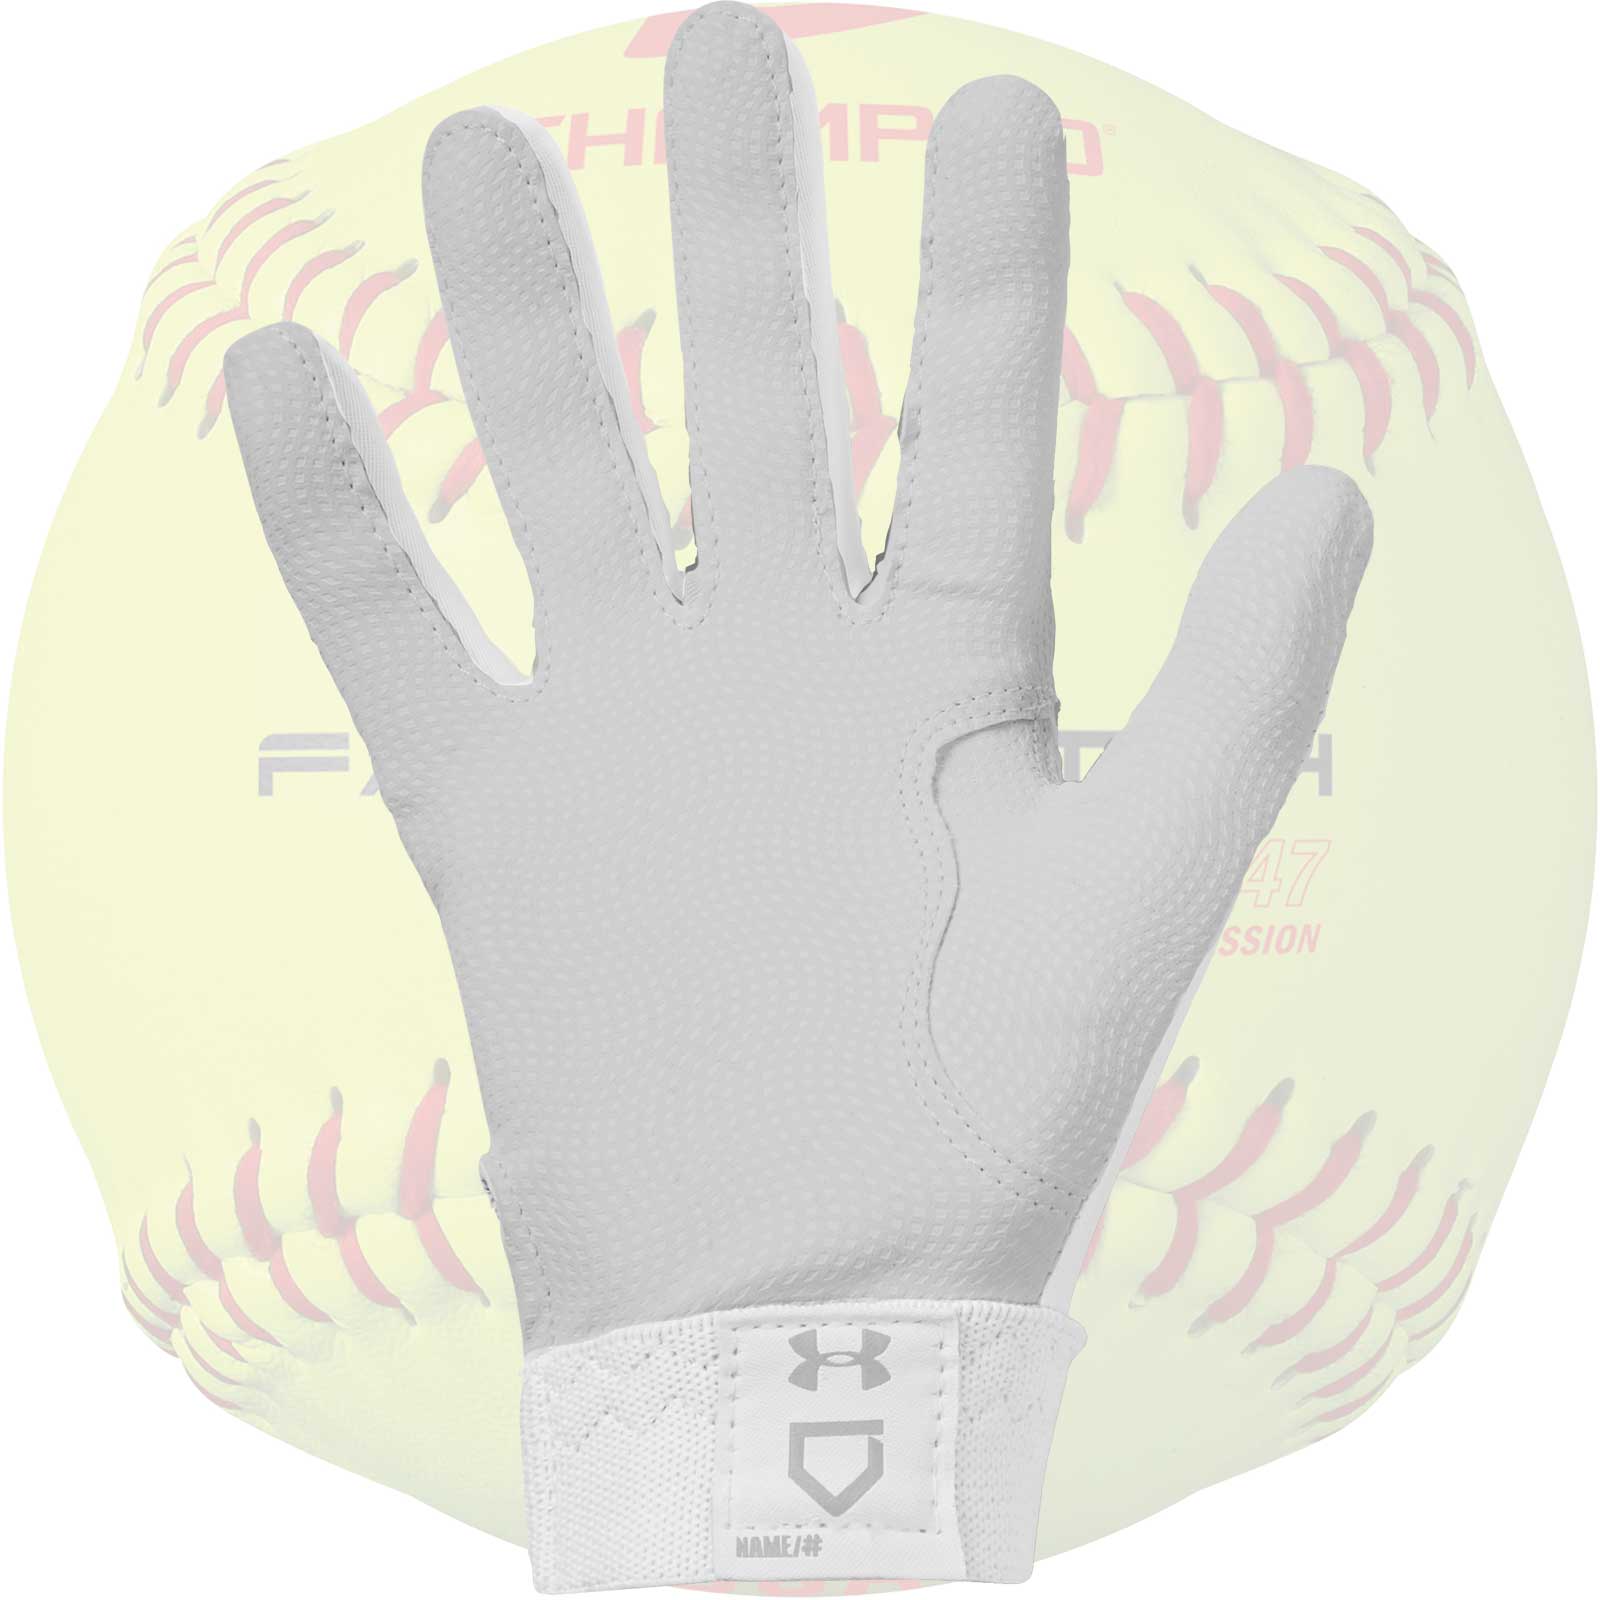  Under Armour Radar Womens Softball Batting Gloves - Palm